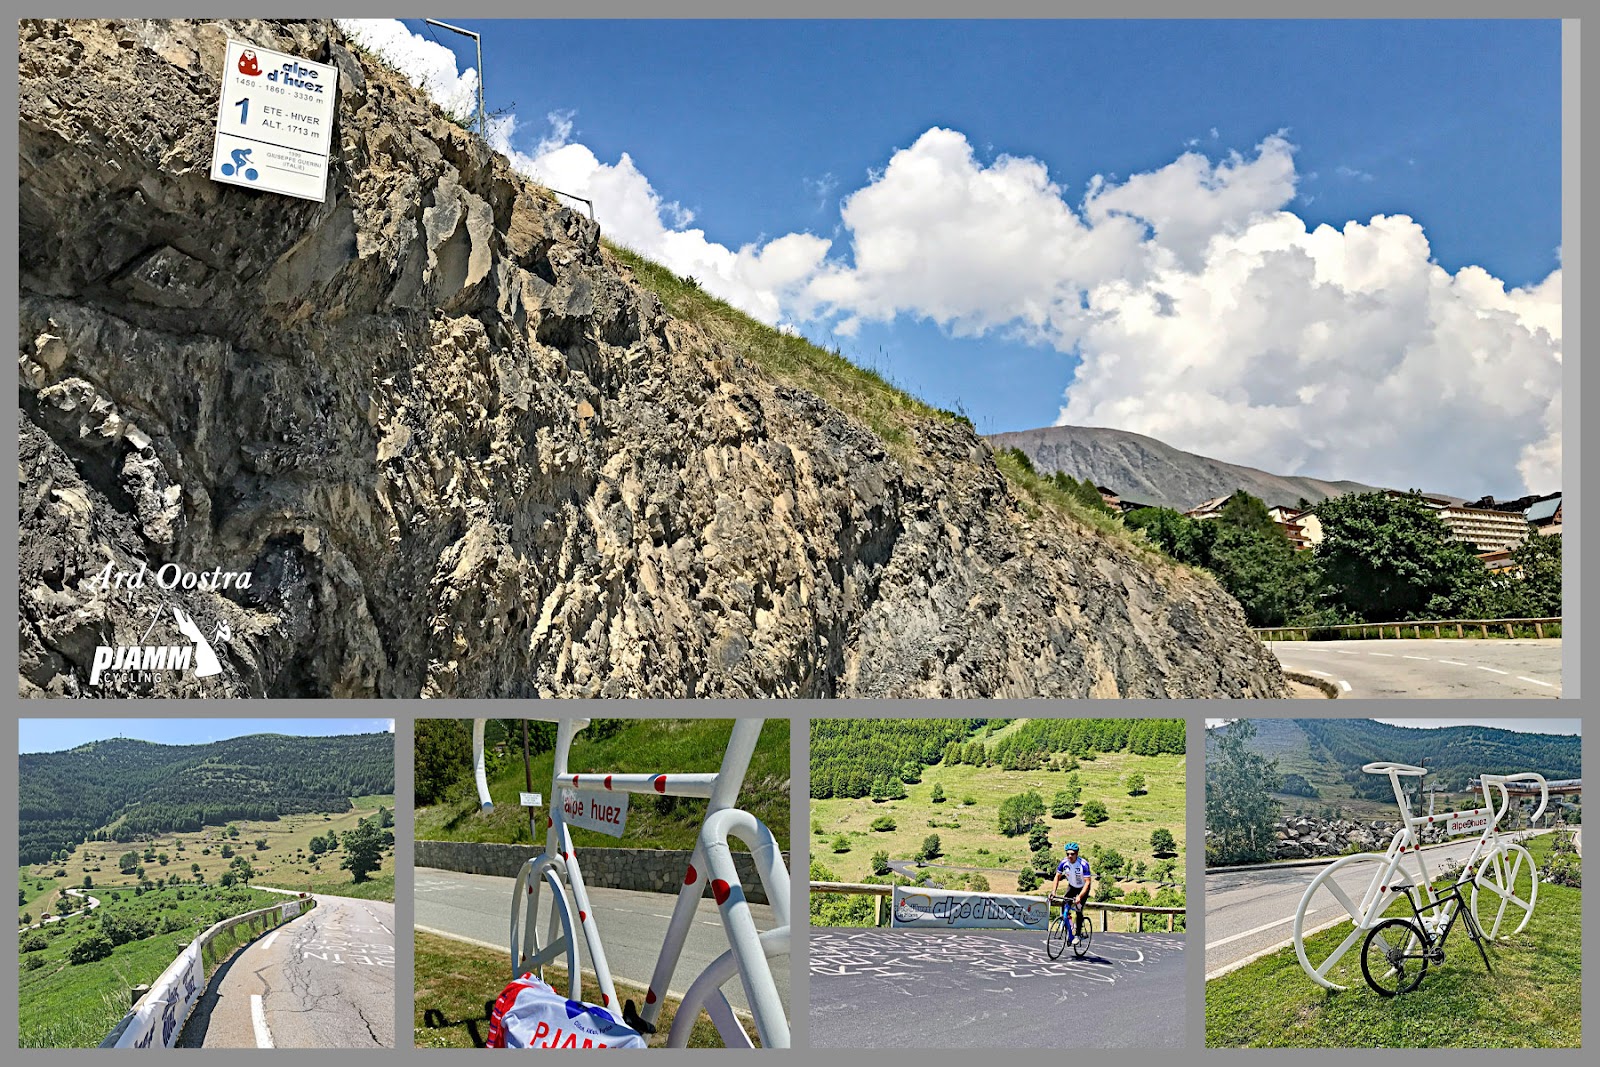 large statue of a white bike on the Alpe D'Huez bike climb, between kilometers 5 and 4